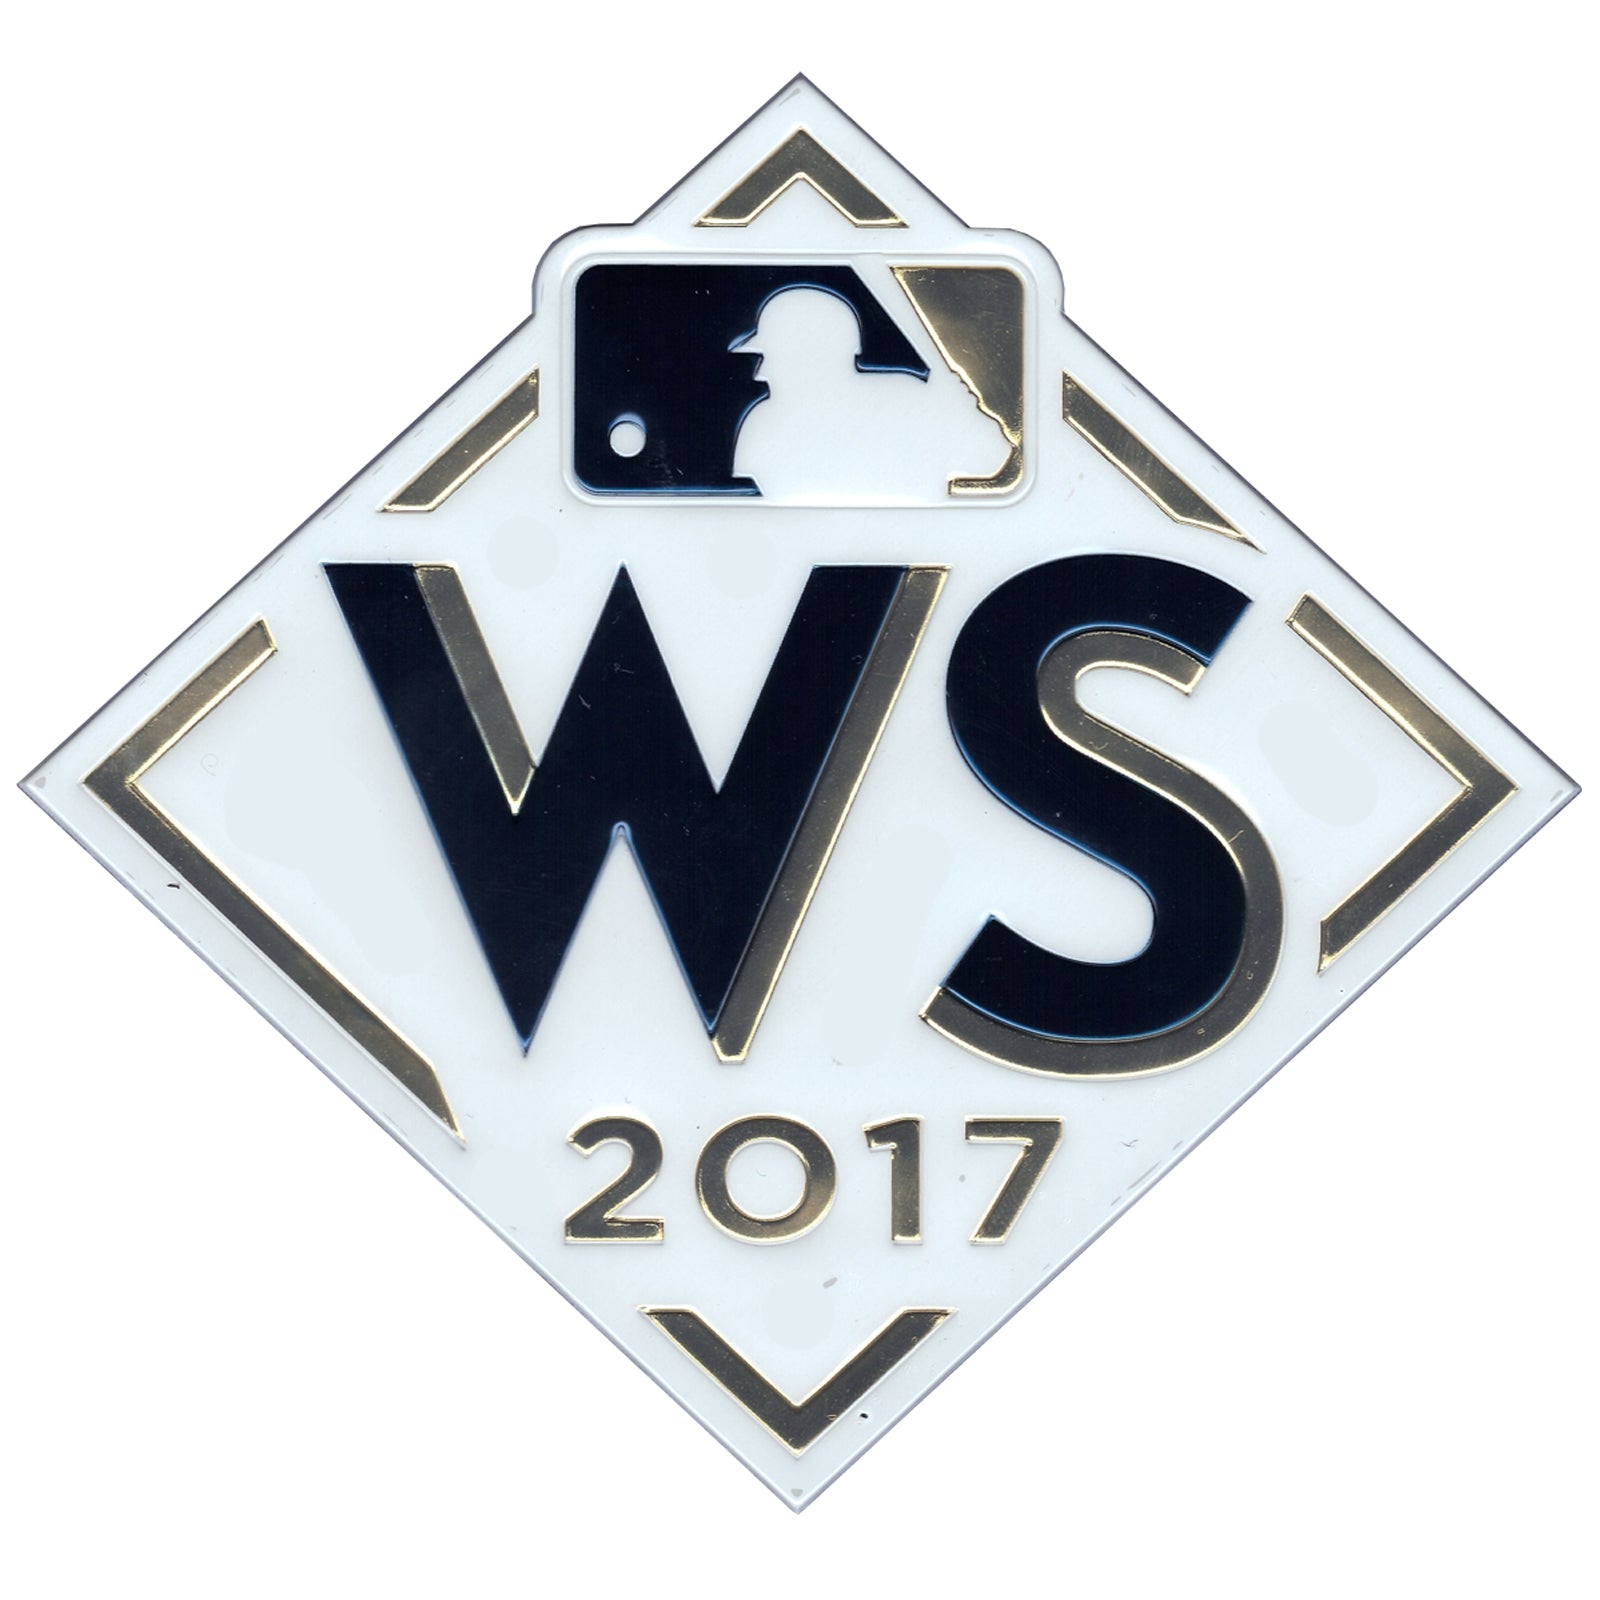 MLB 2019 World Series Generic Patch